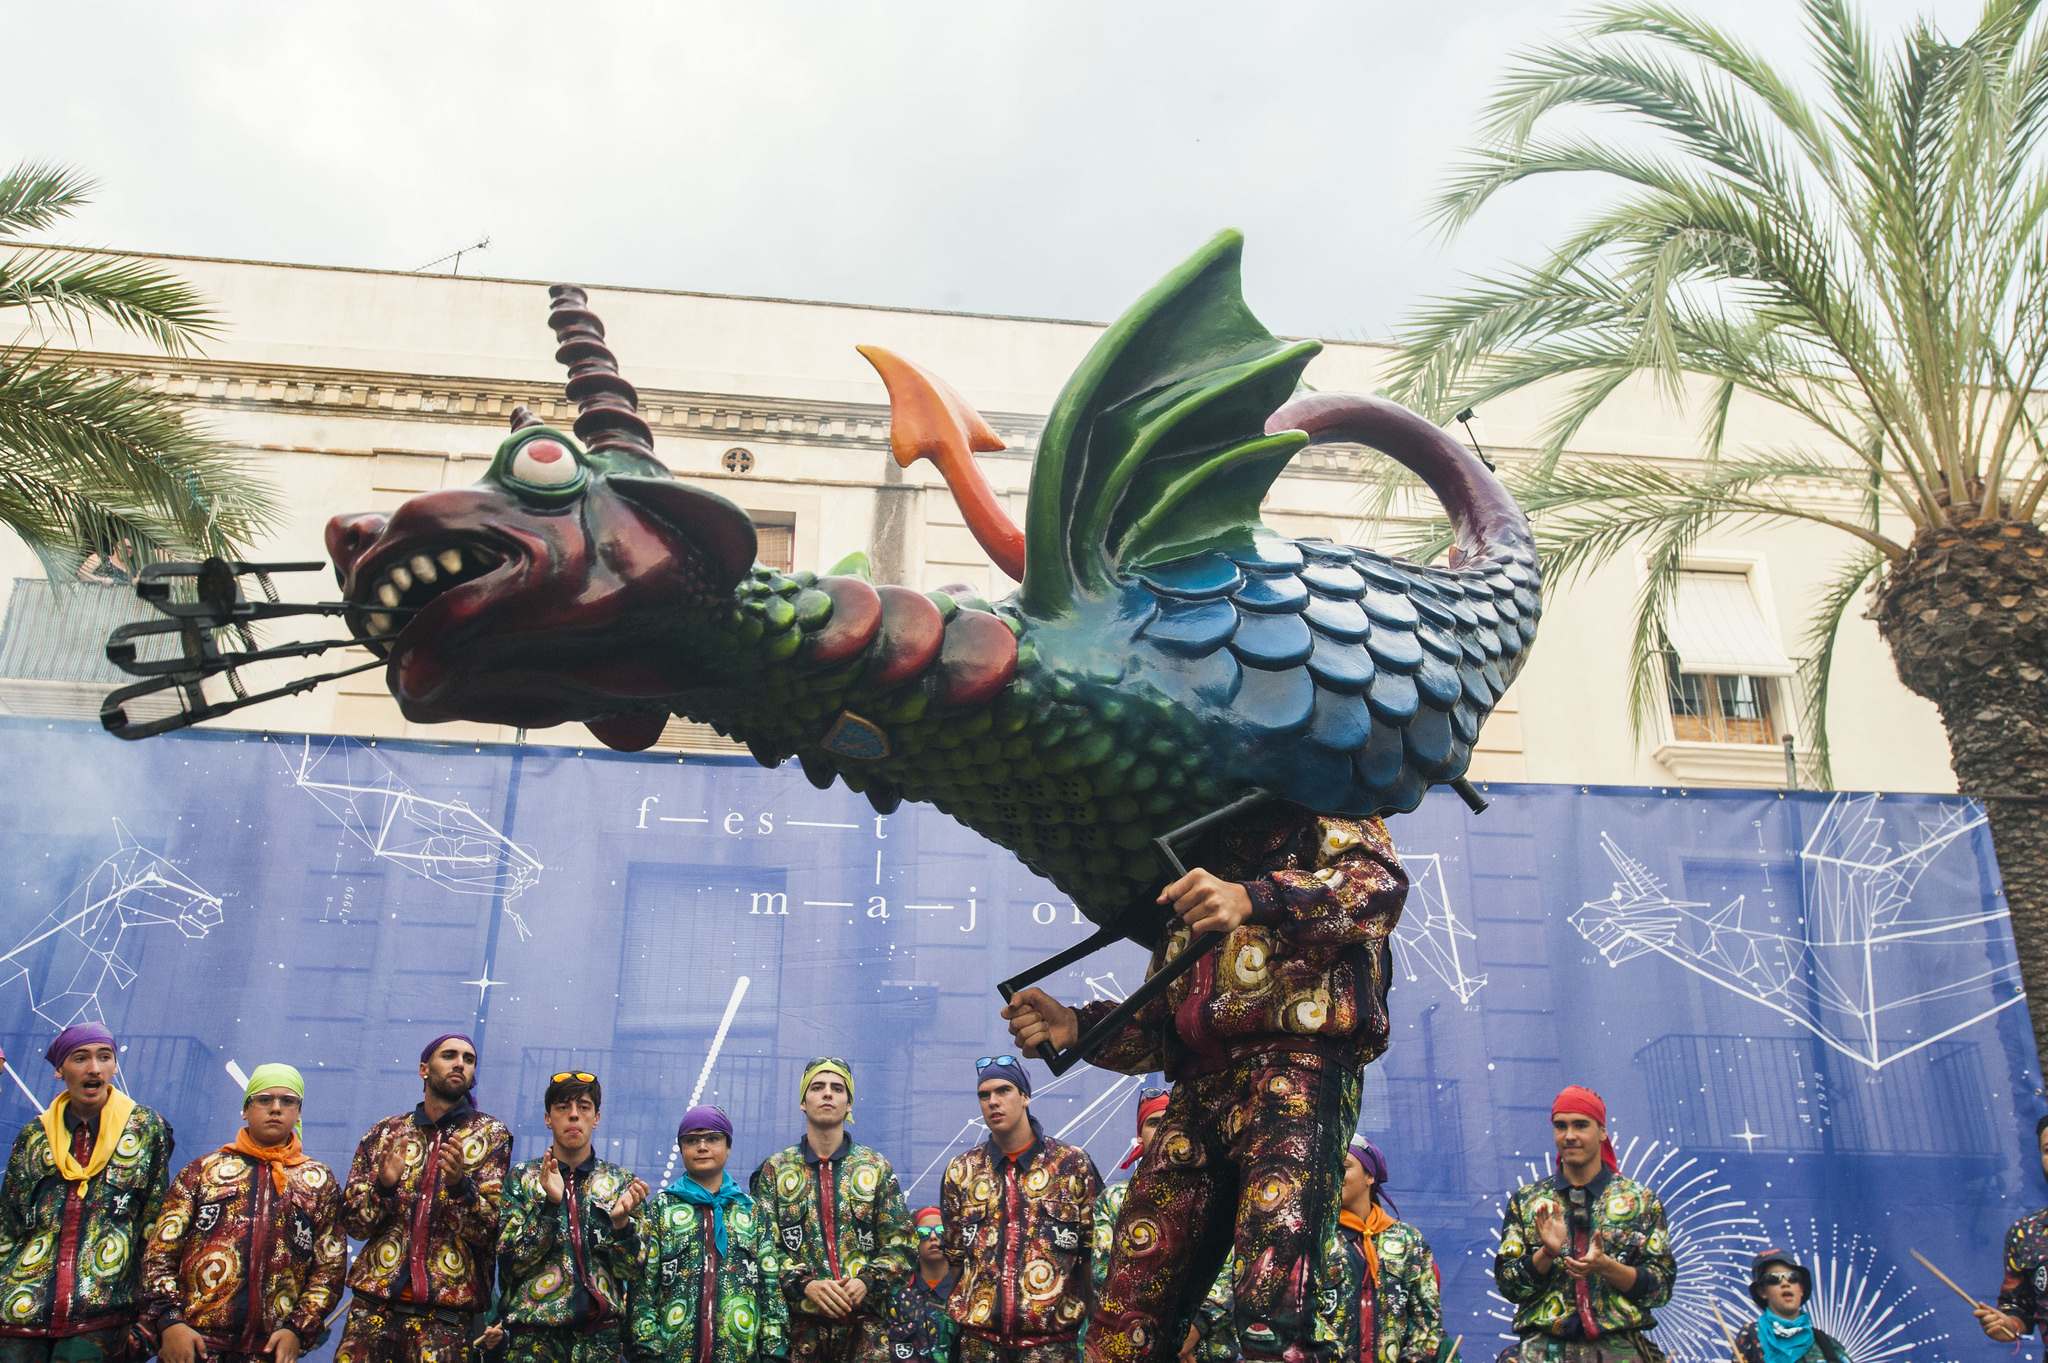 dragon barrina7 Presentation of New Dragon Barrina at Festival of Vilanova i la Geltru